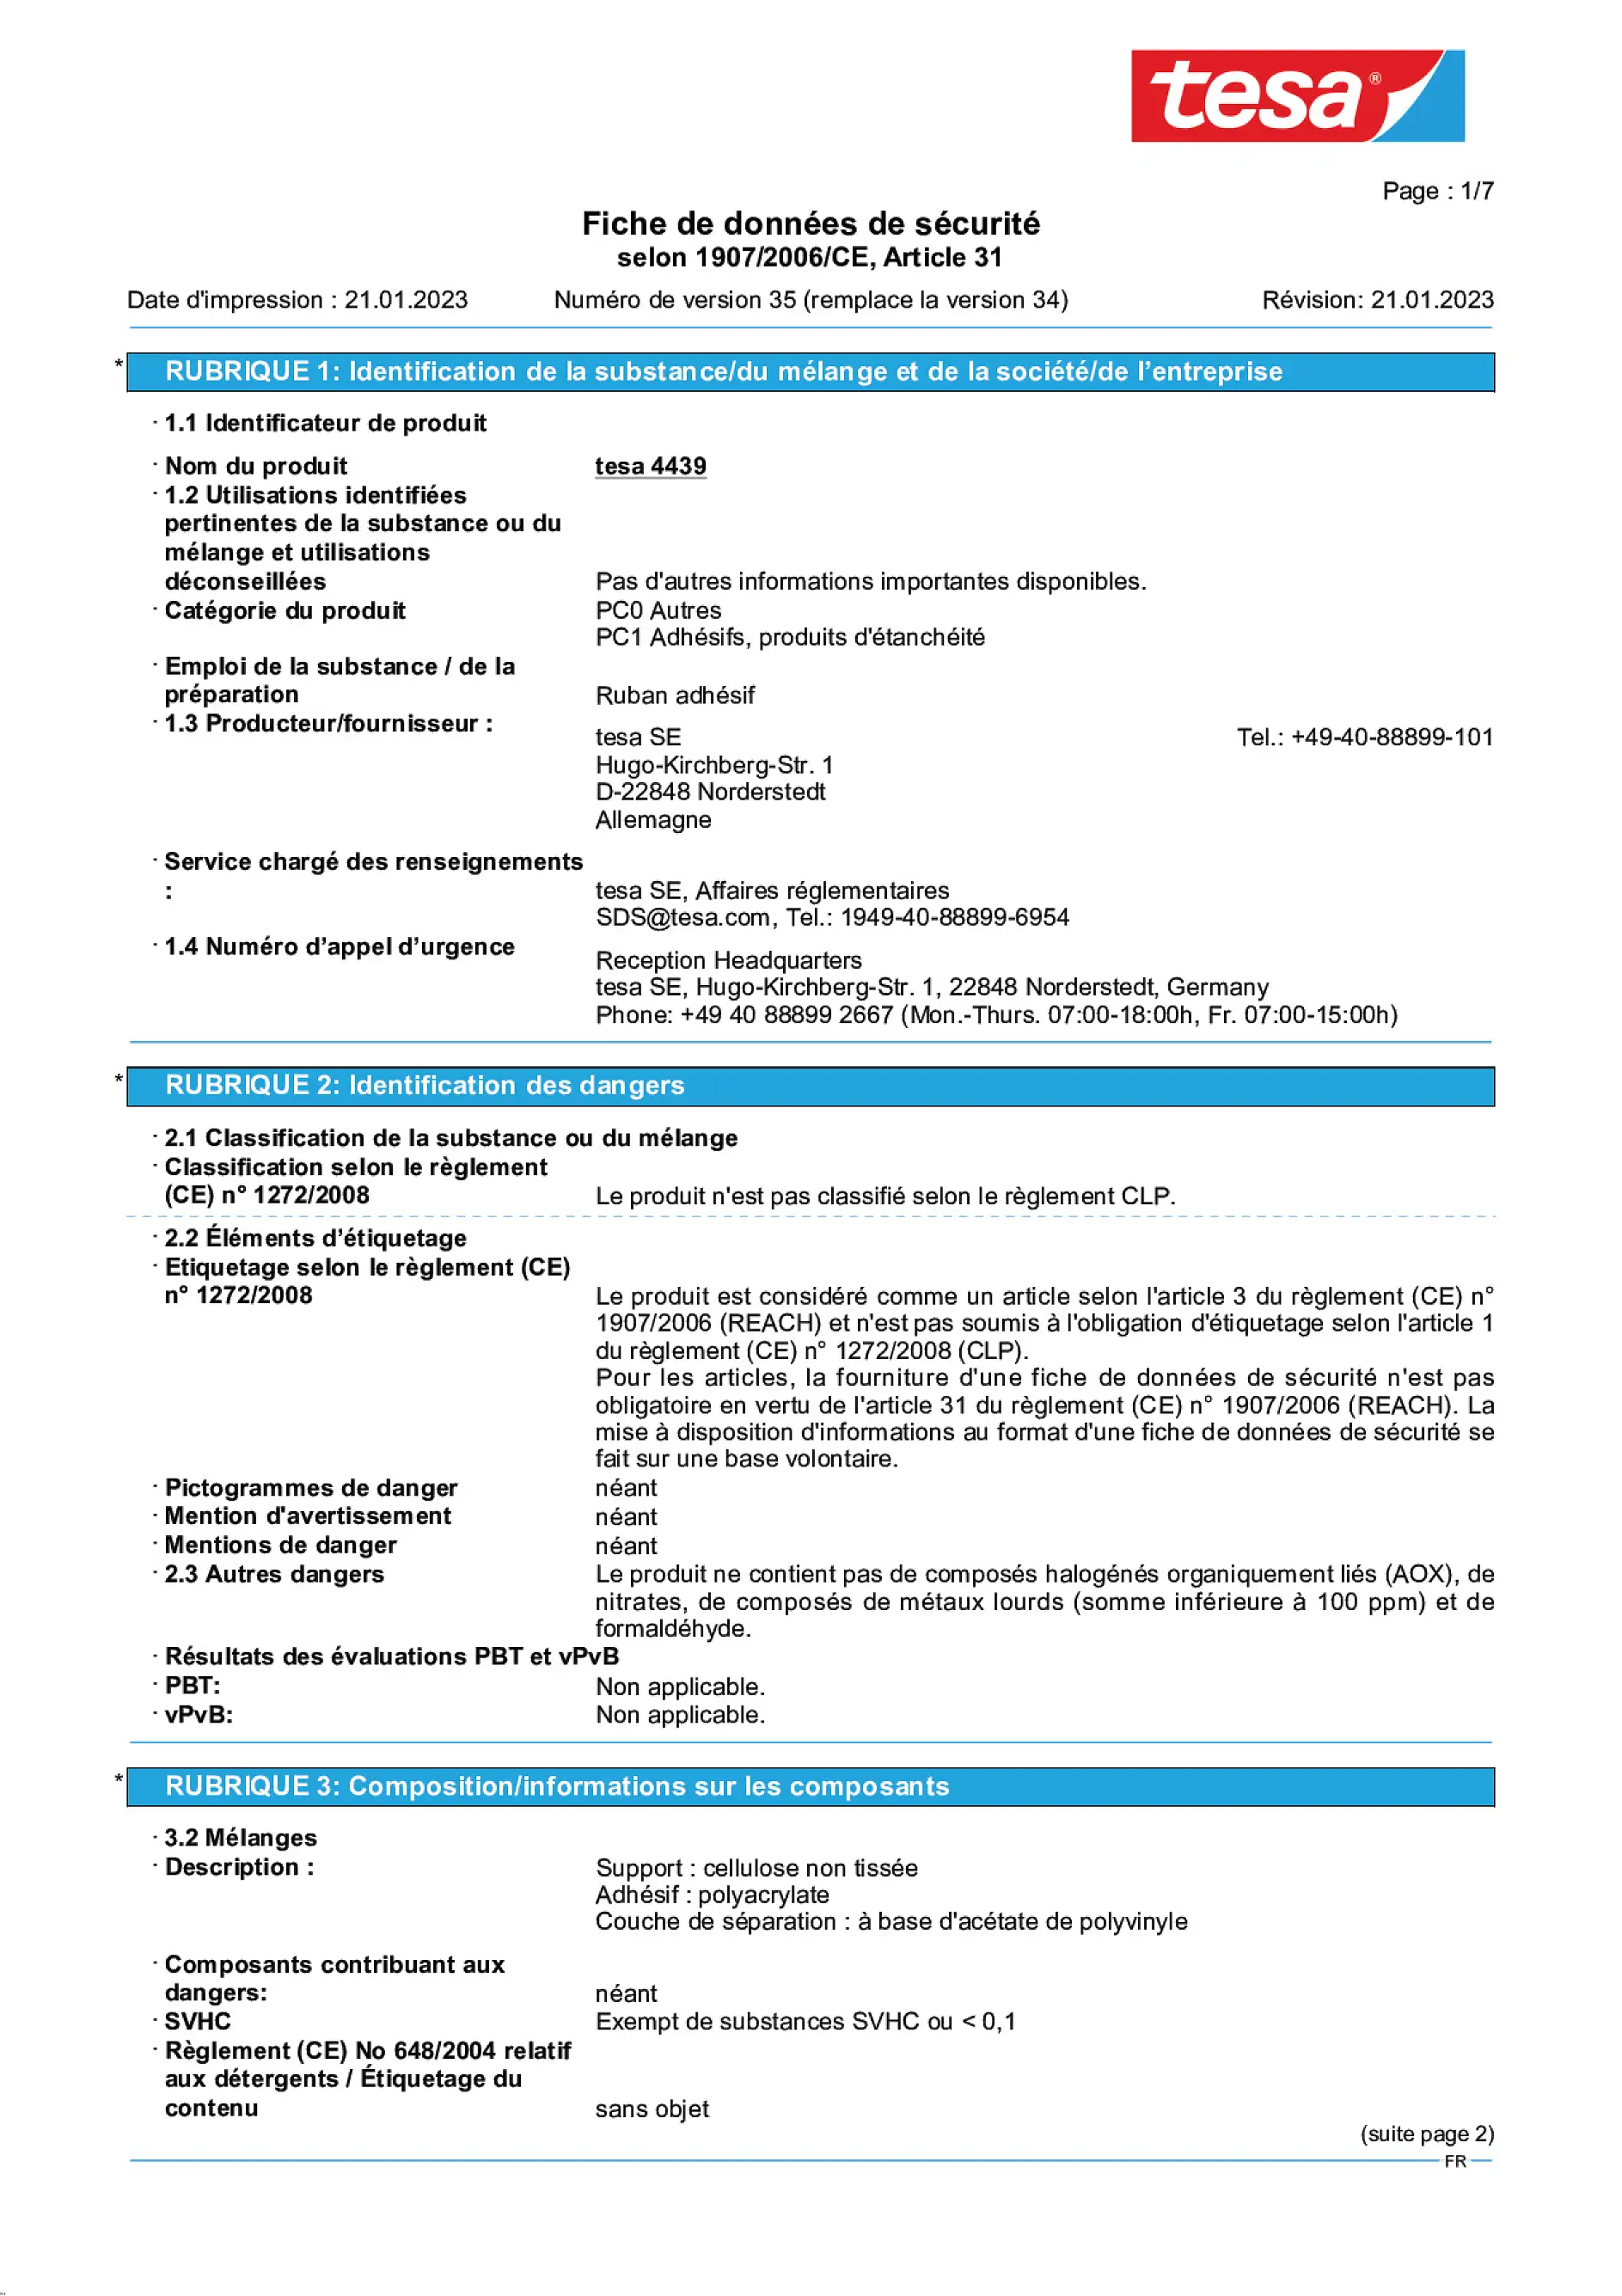 Safety data sheet_tesa® Professional 04439_fr-FR_v35